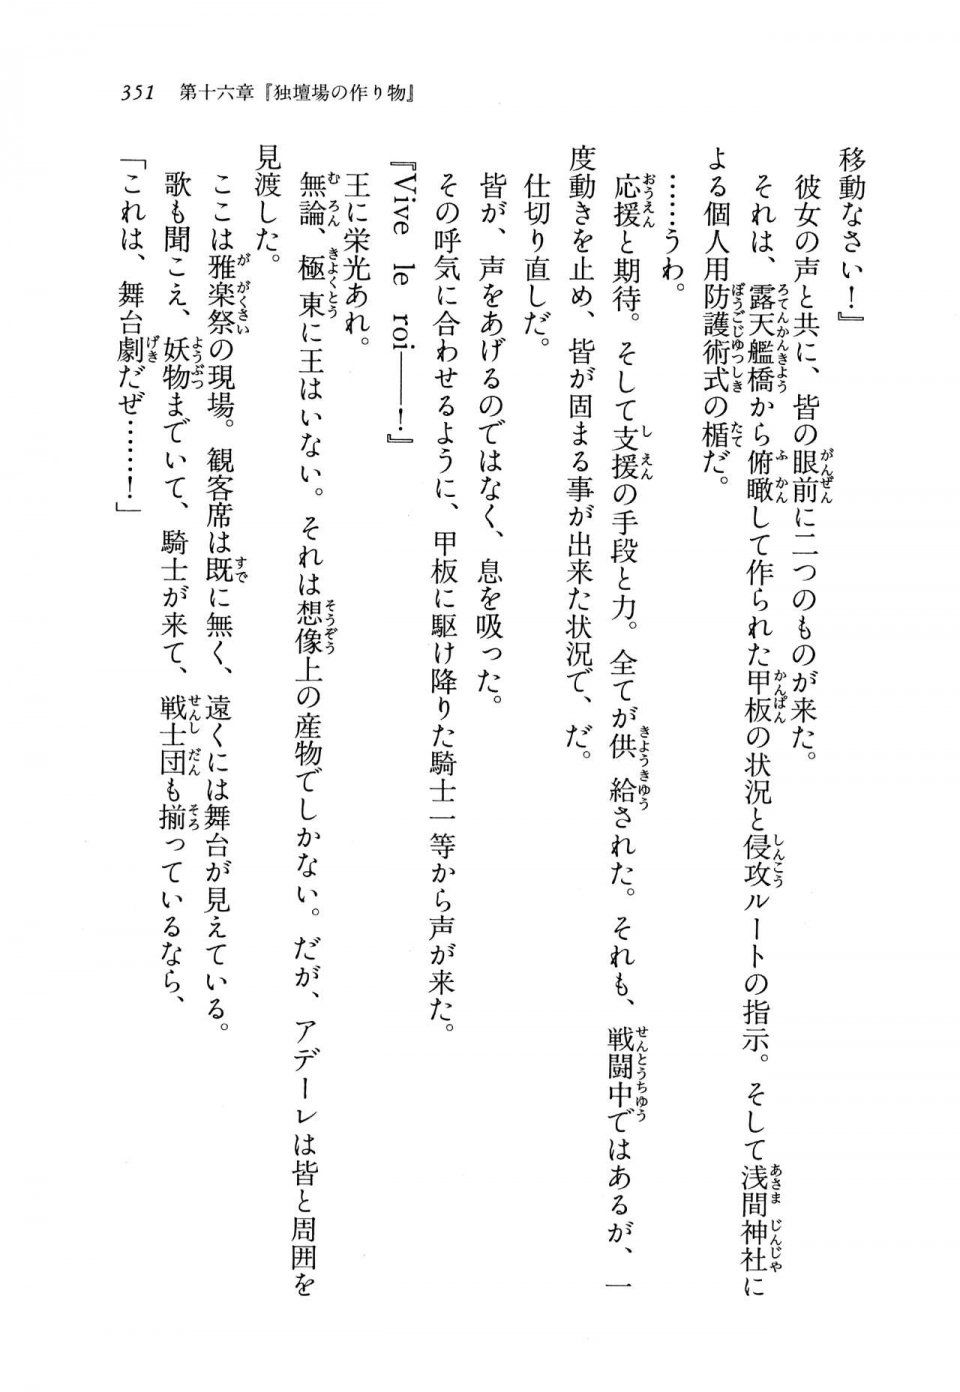 Kyoukai Senjou no Horizon BD Special Mininovel Vol 8(4B) - Photo #355